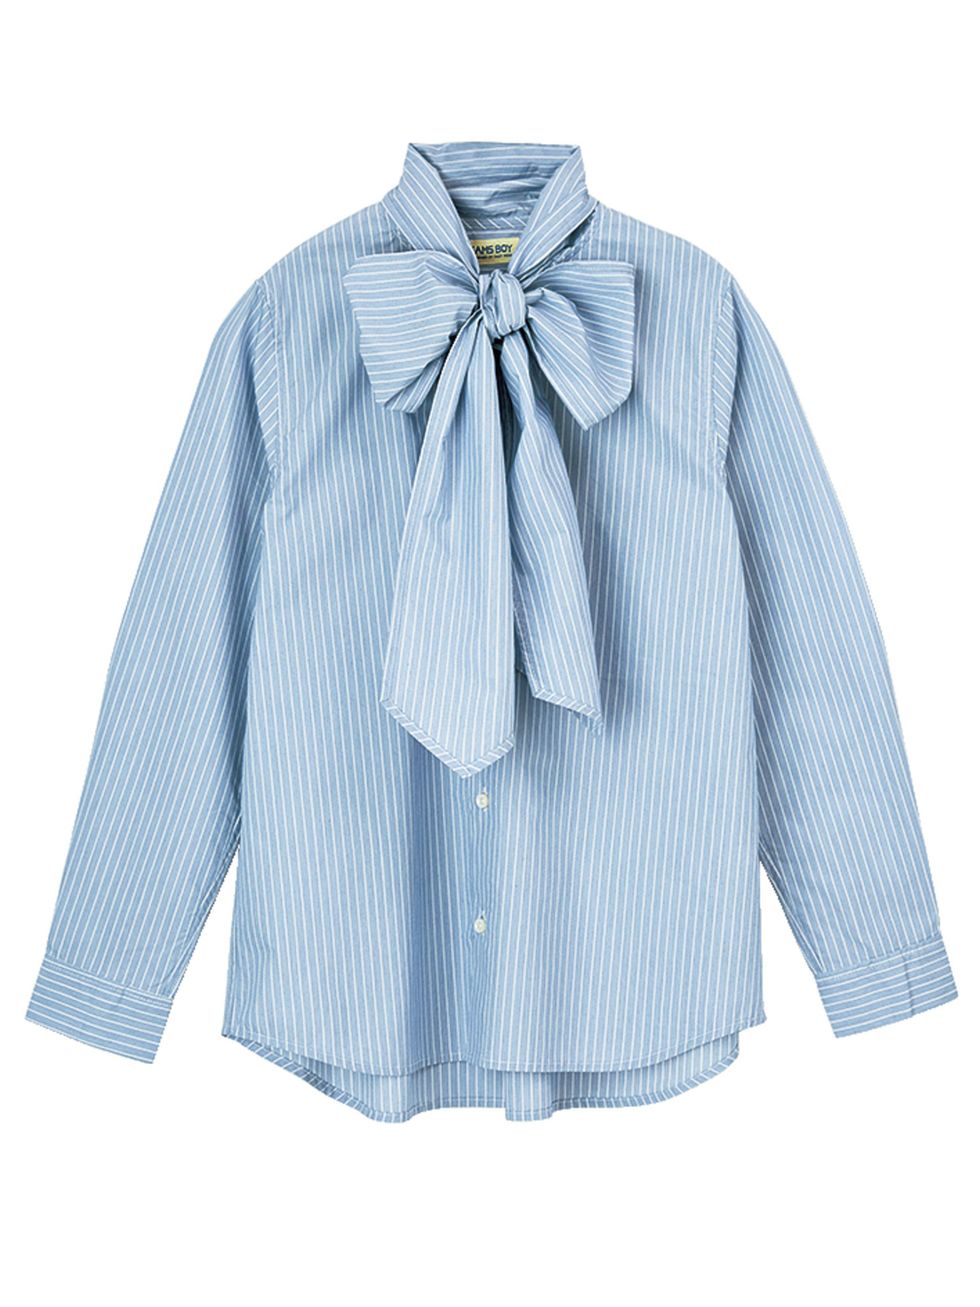 Clothing, Blue, Product, Dress shirt, Collar, Sleeve, Textile, Shirt, Pattern, White, 